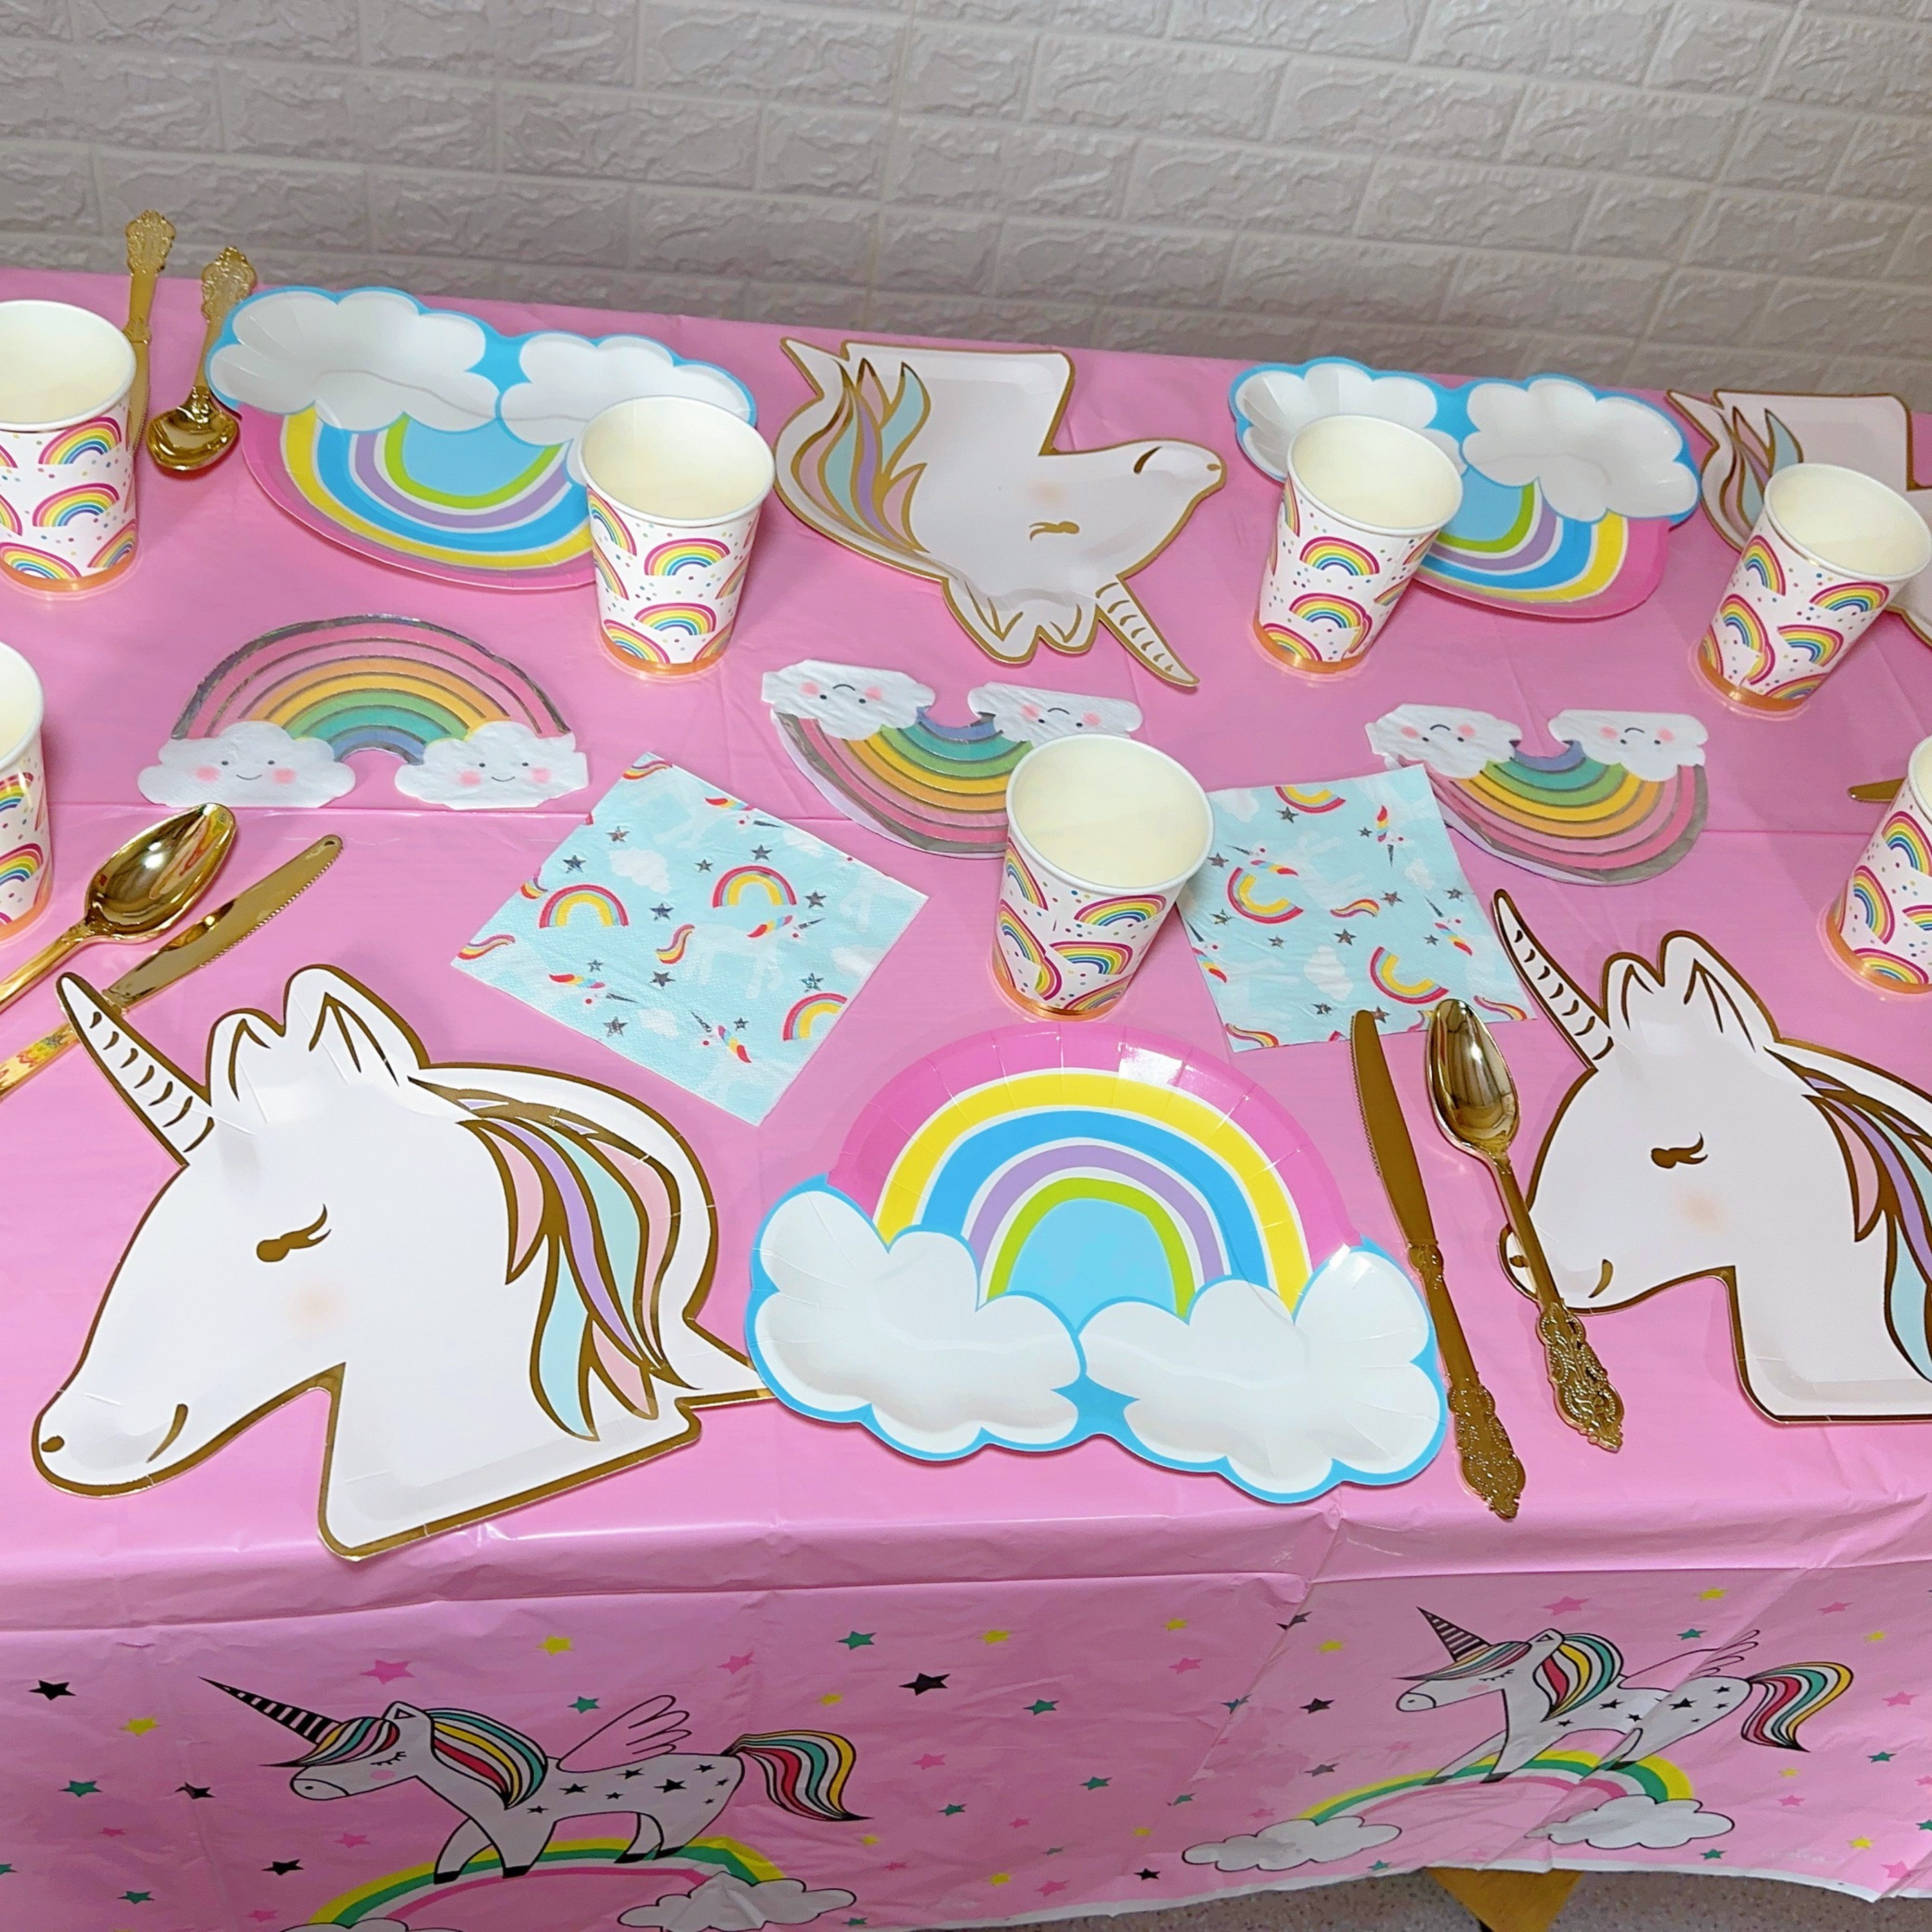 Rainbow Unicorn Party Decorations